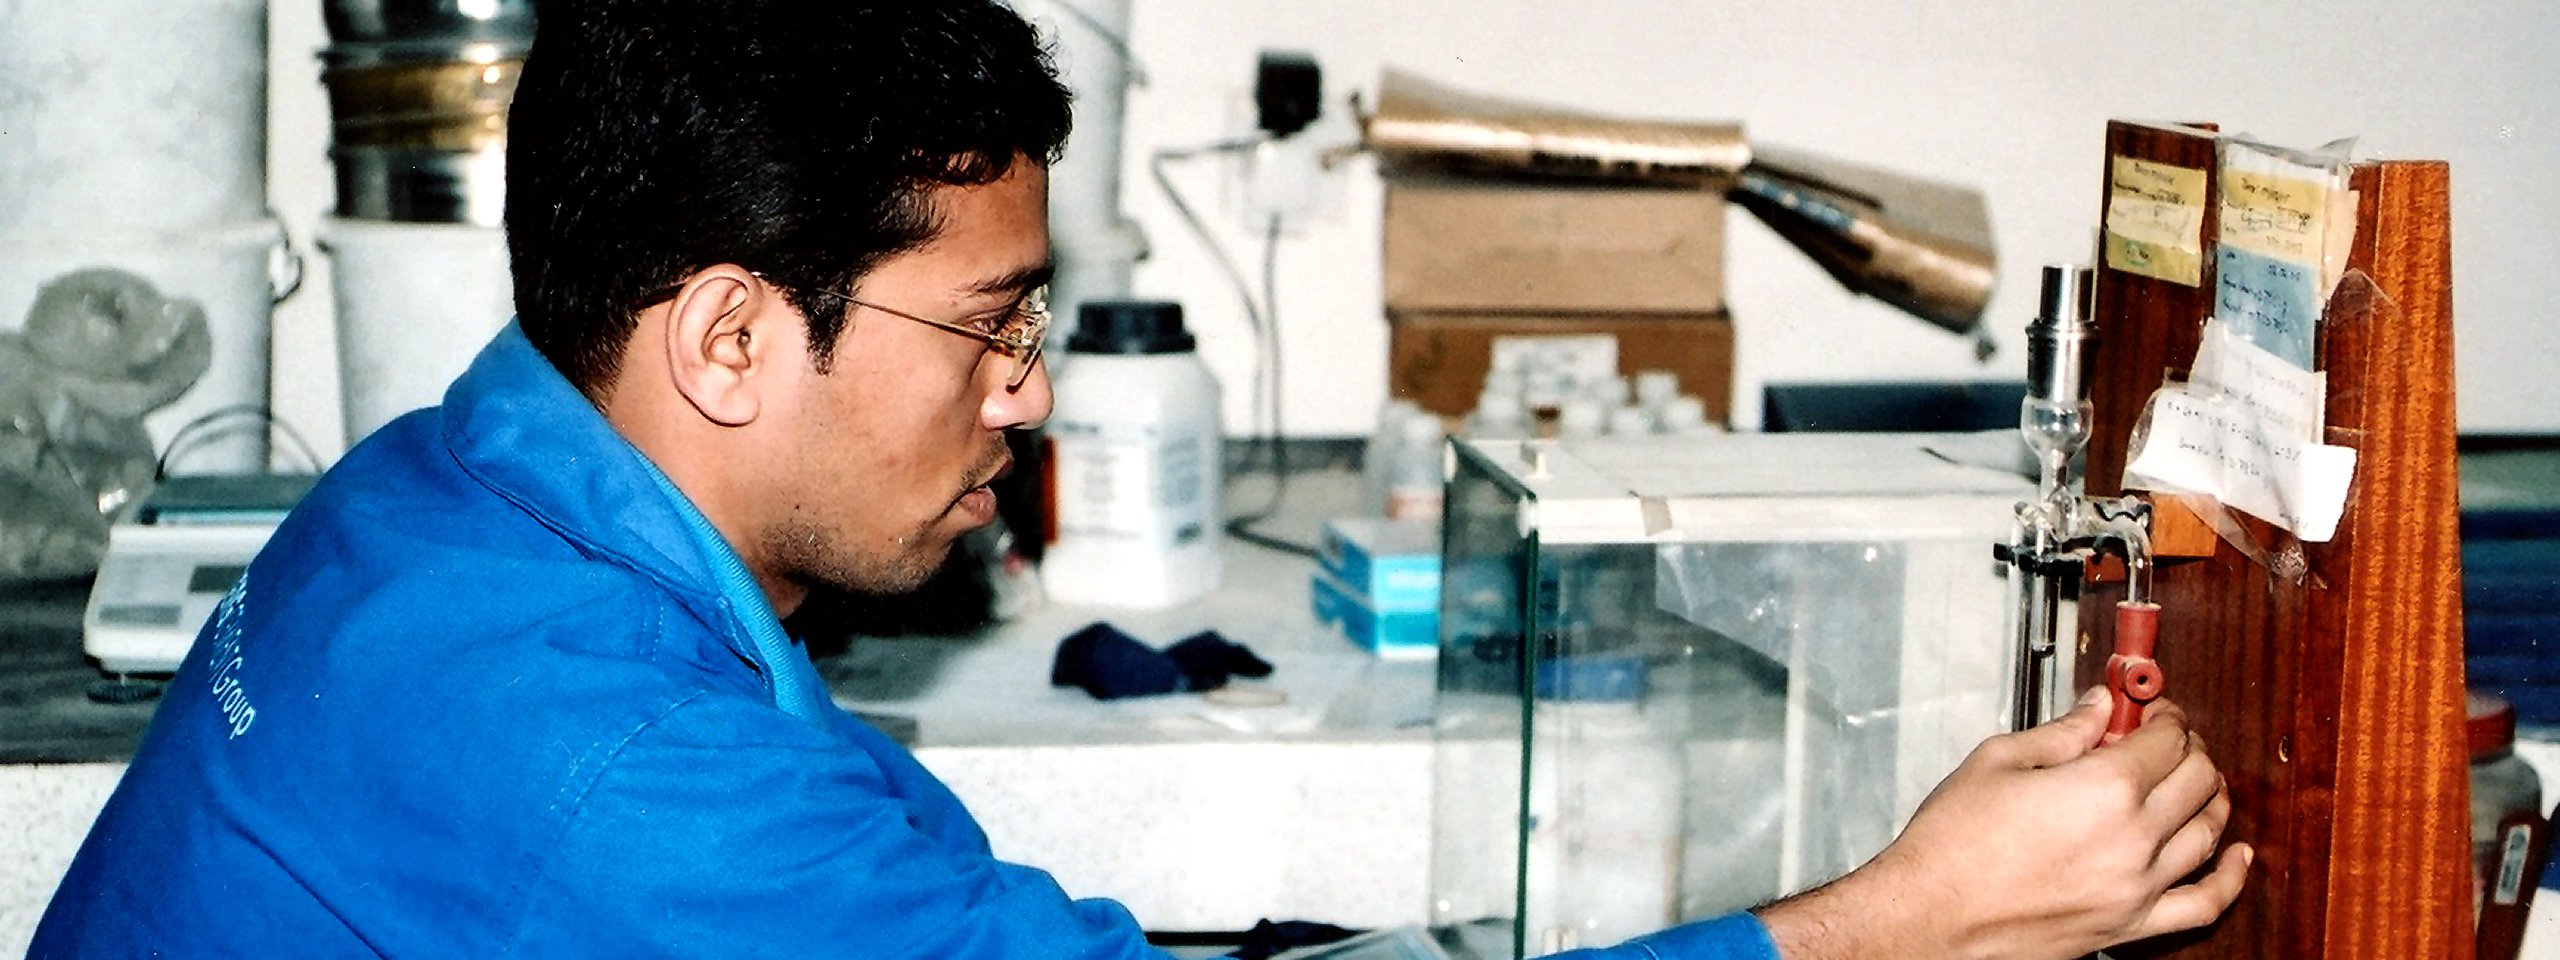 A laboratory technician from Bangladesh